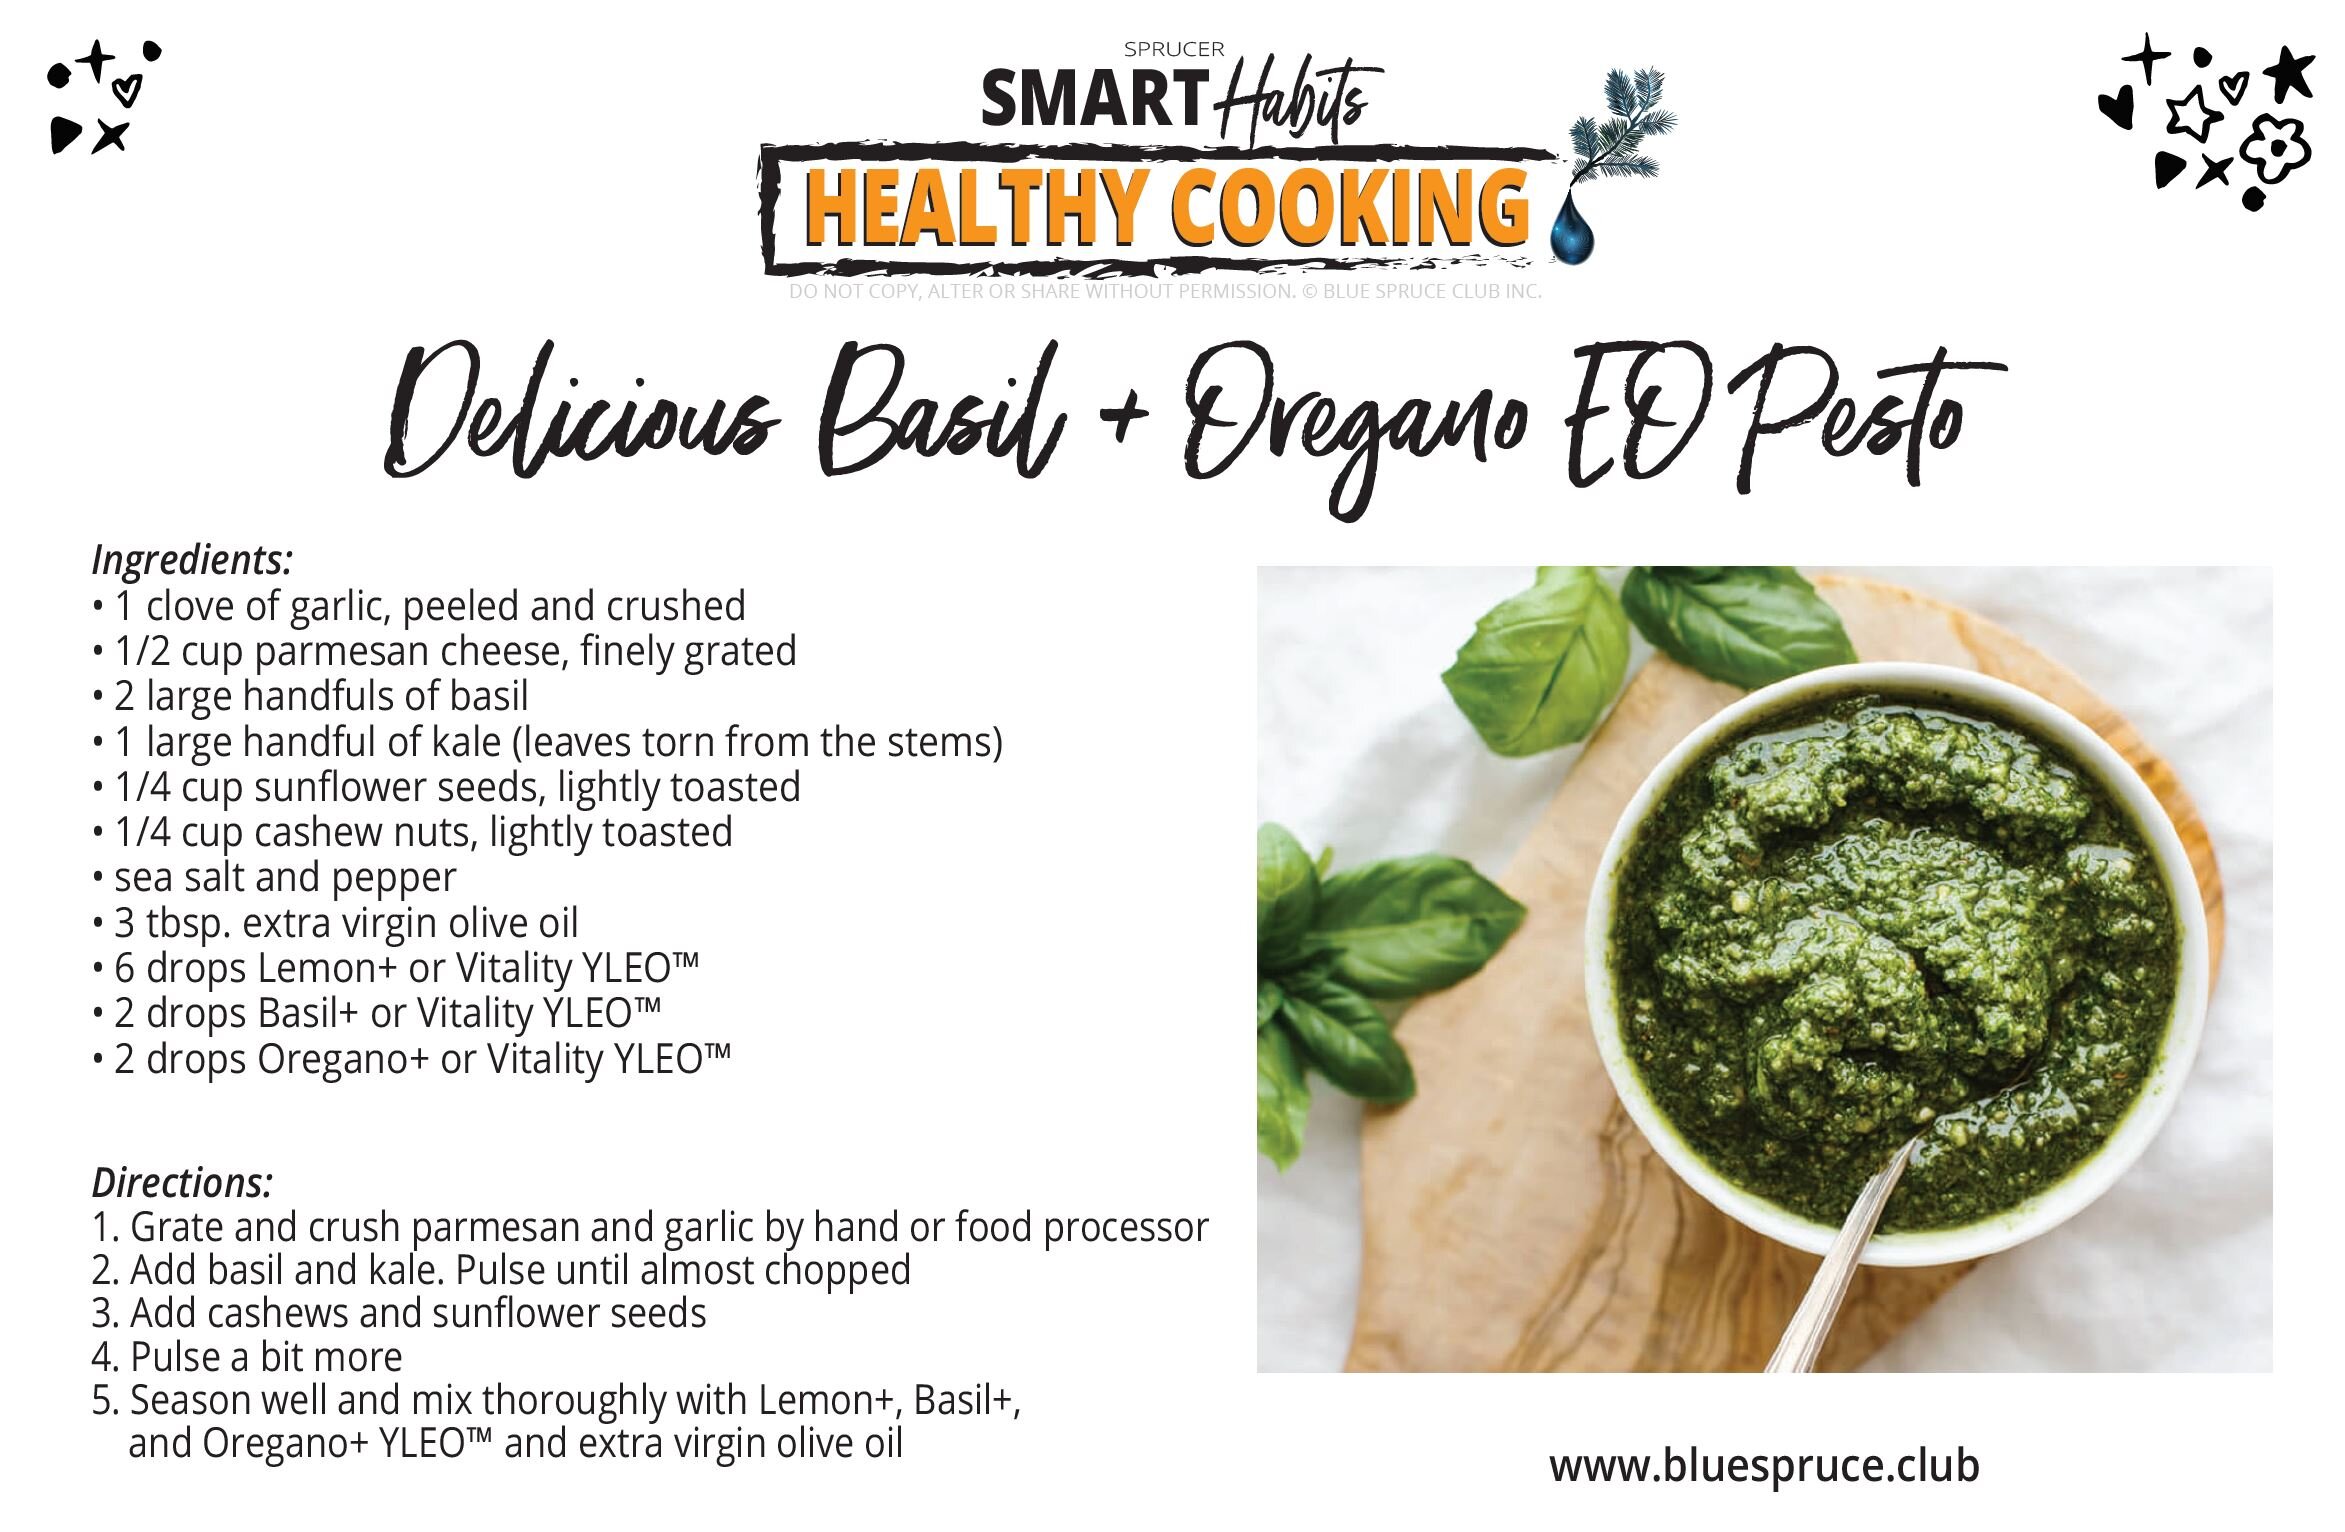 SMART HABITS_Healthy Cooking_Delicious Basil and Oregano Pesto.JPG